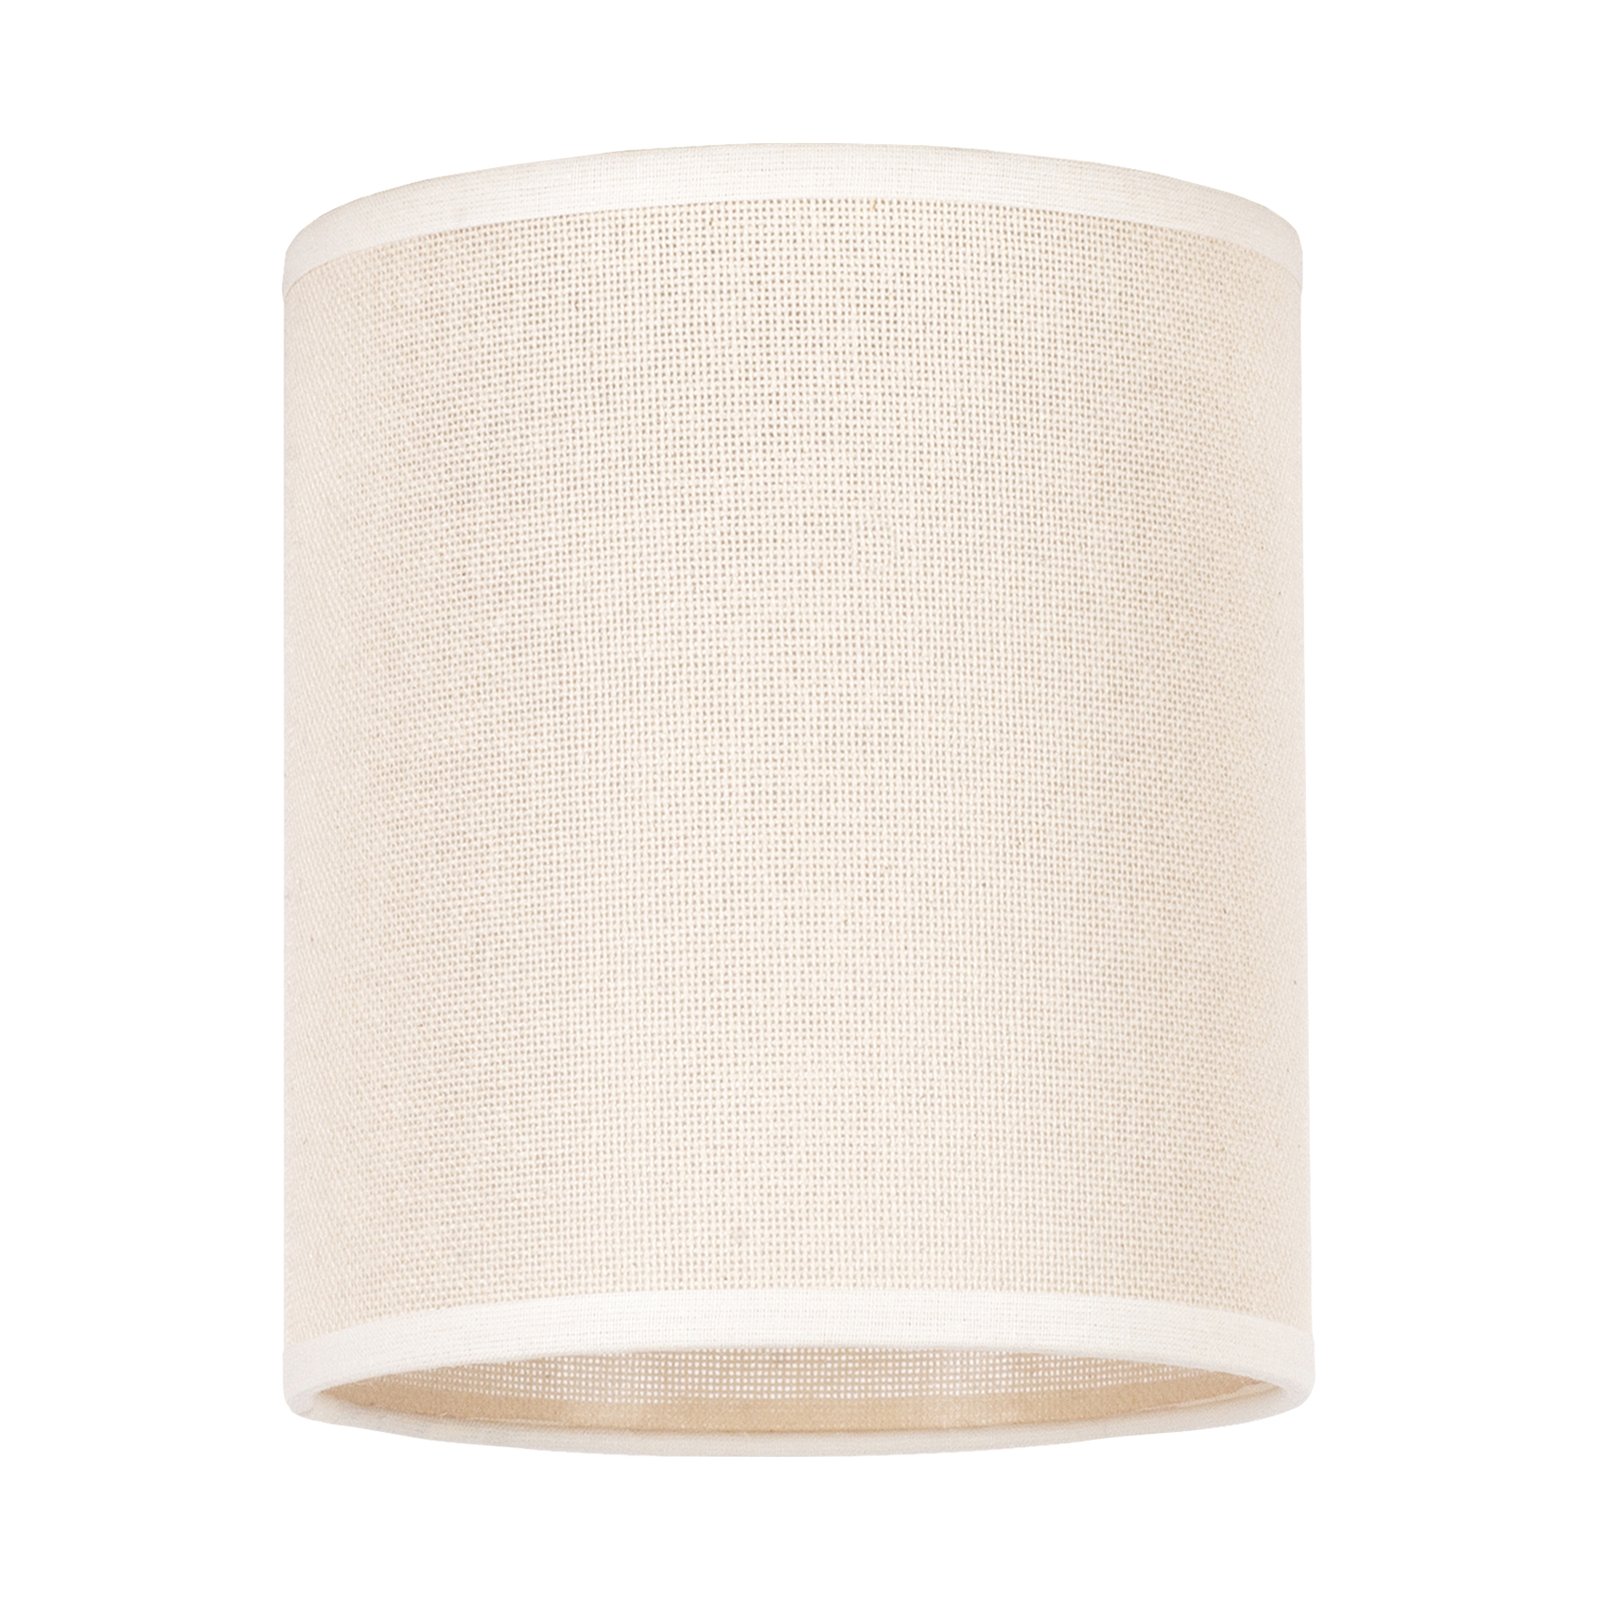 Roller lampshade, beige, Ø 13 cm, height 15 cm